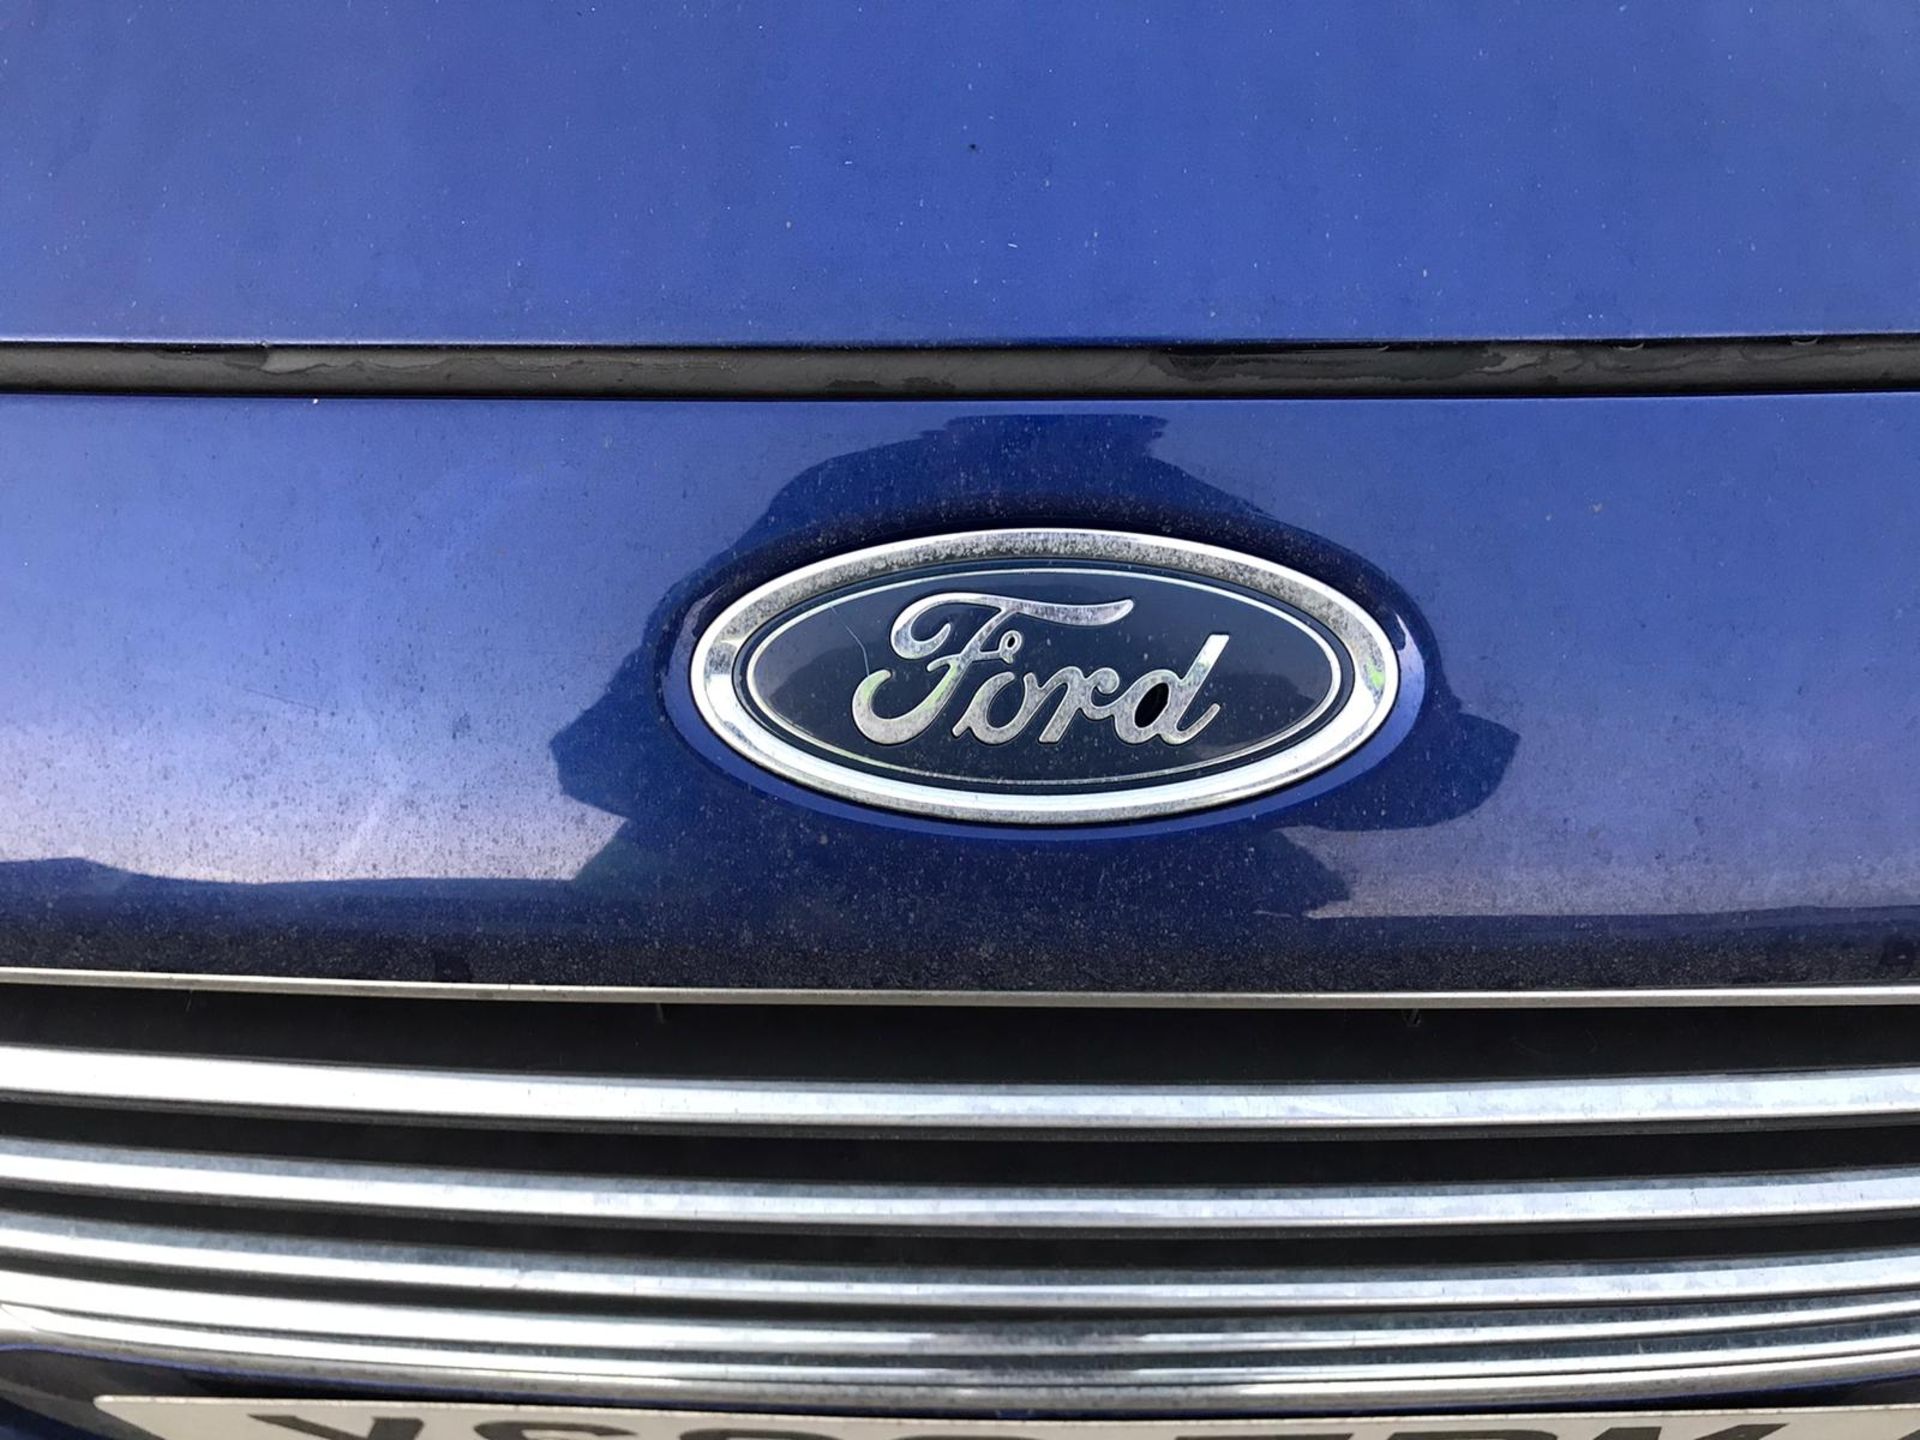 Ford Fiesta Zetec Econectic Tdci 1.6 - Image 20 of 20